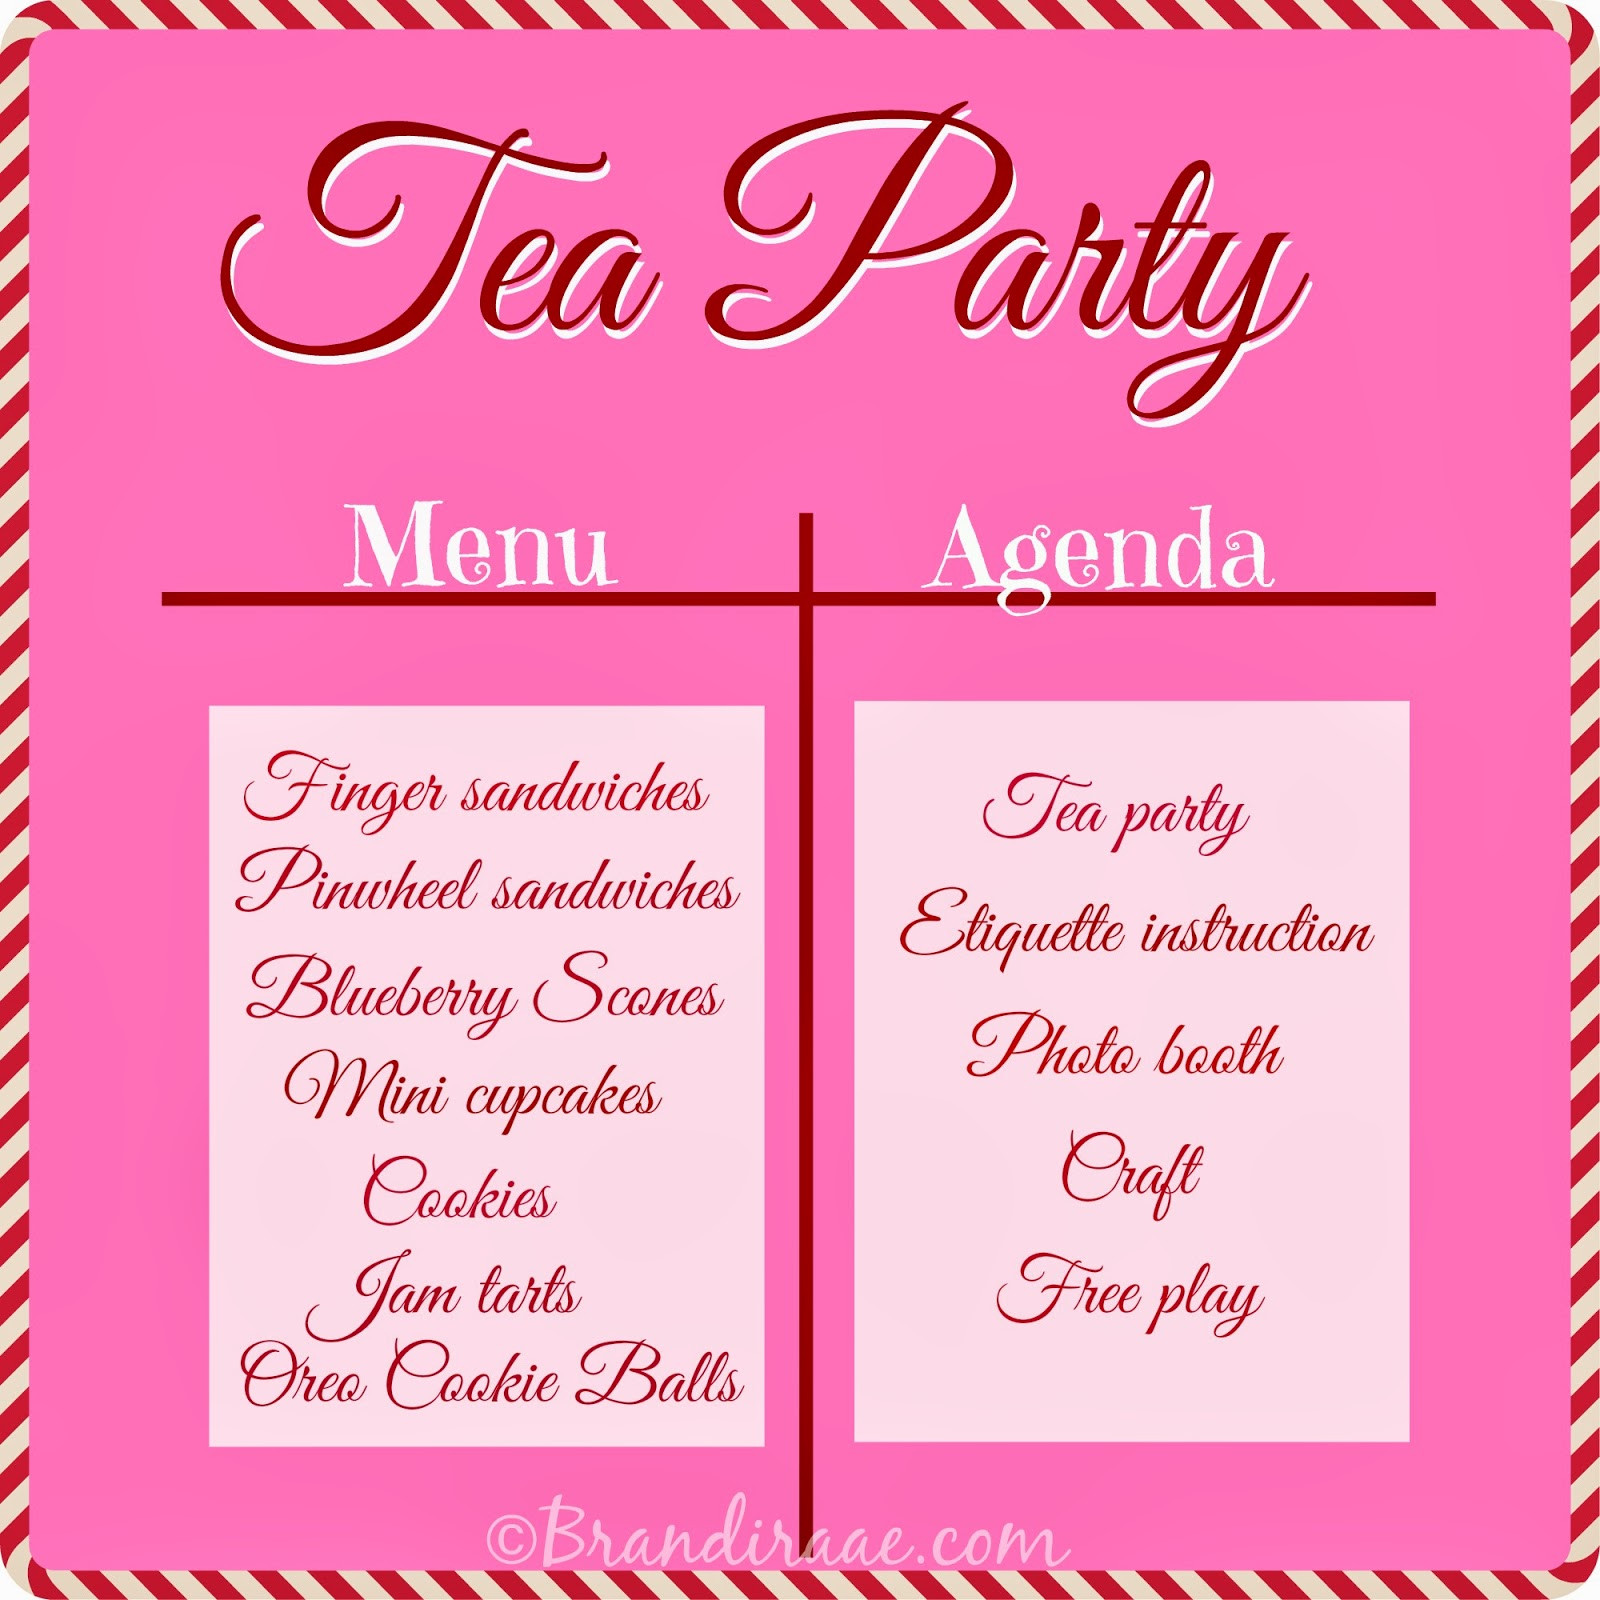 Tea Party Menus Ideas
 Brandi Raae December 2013